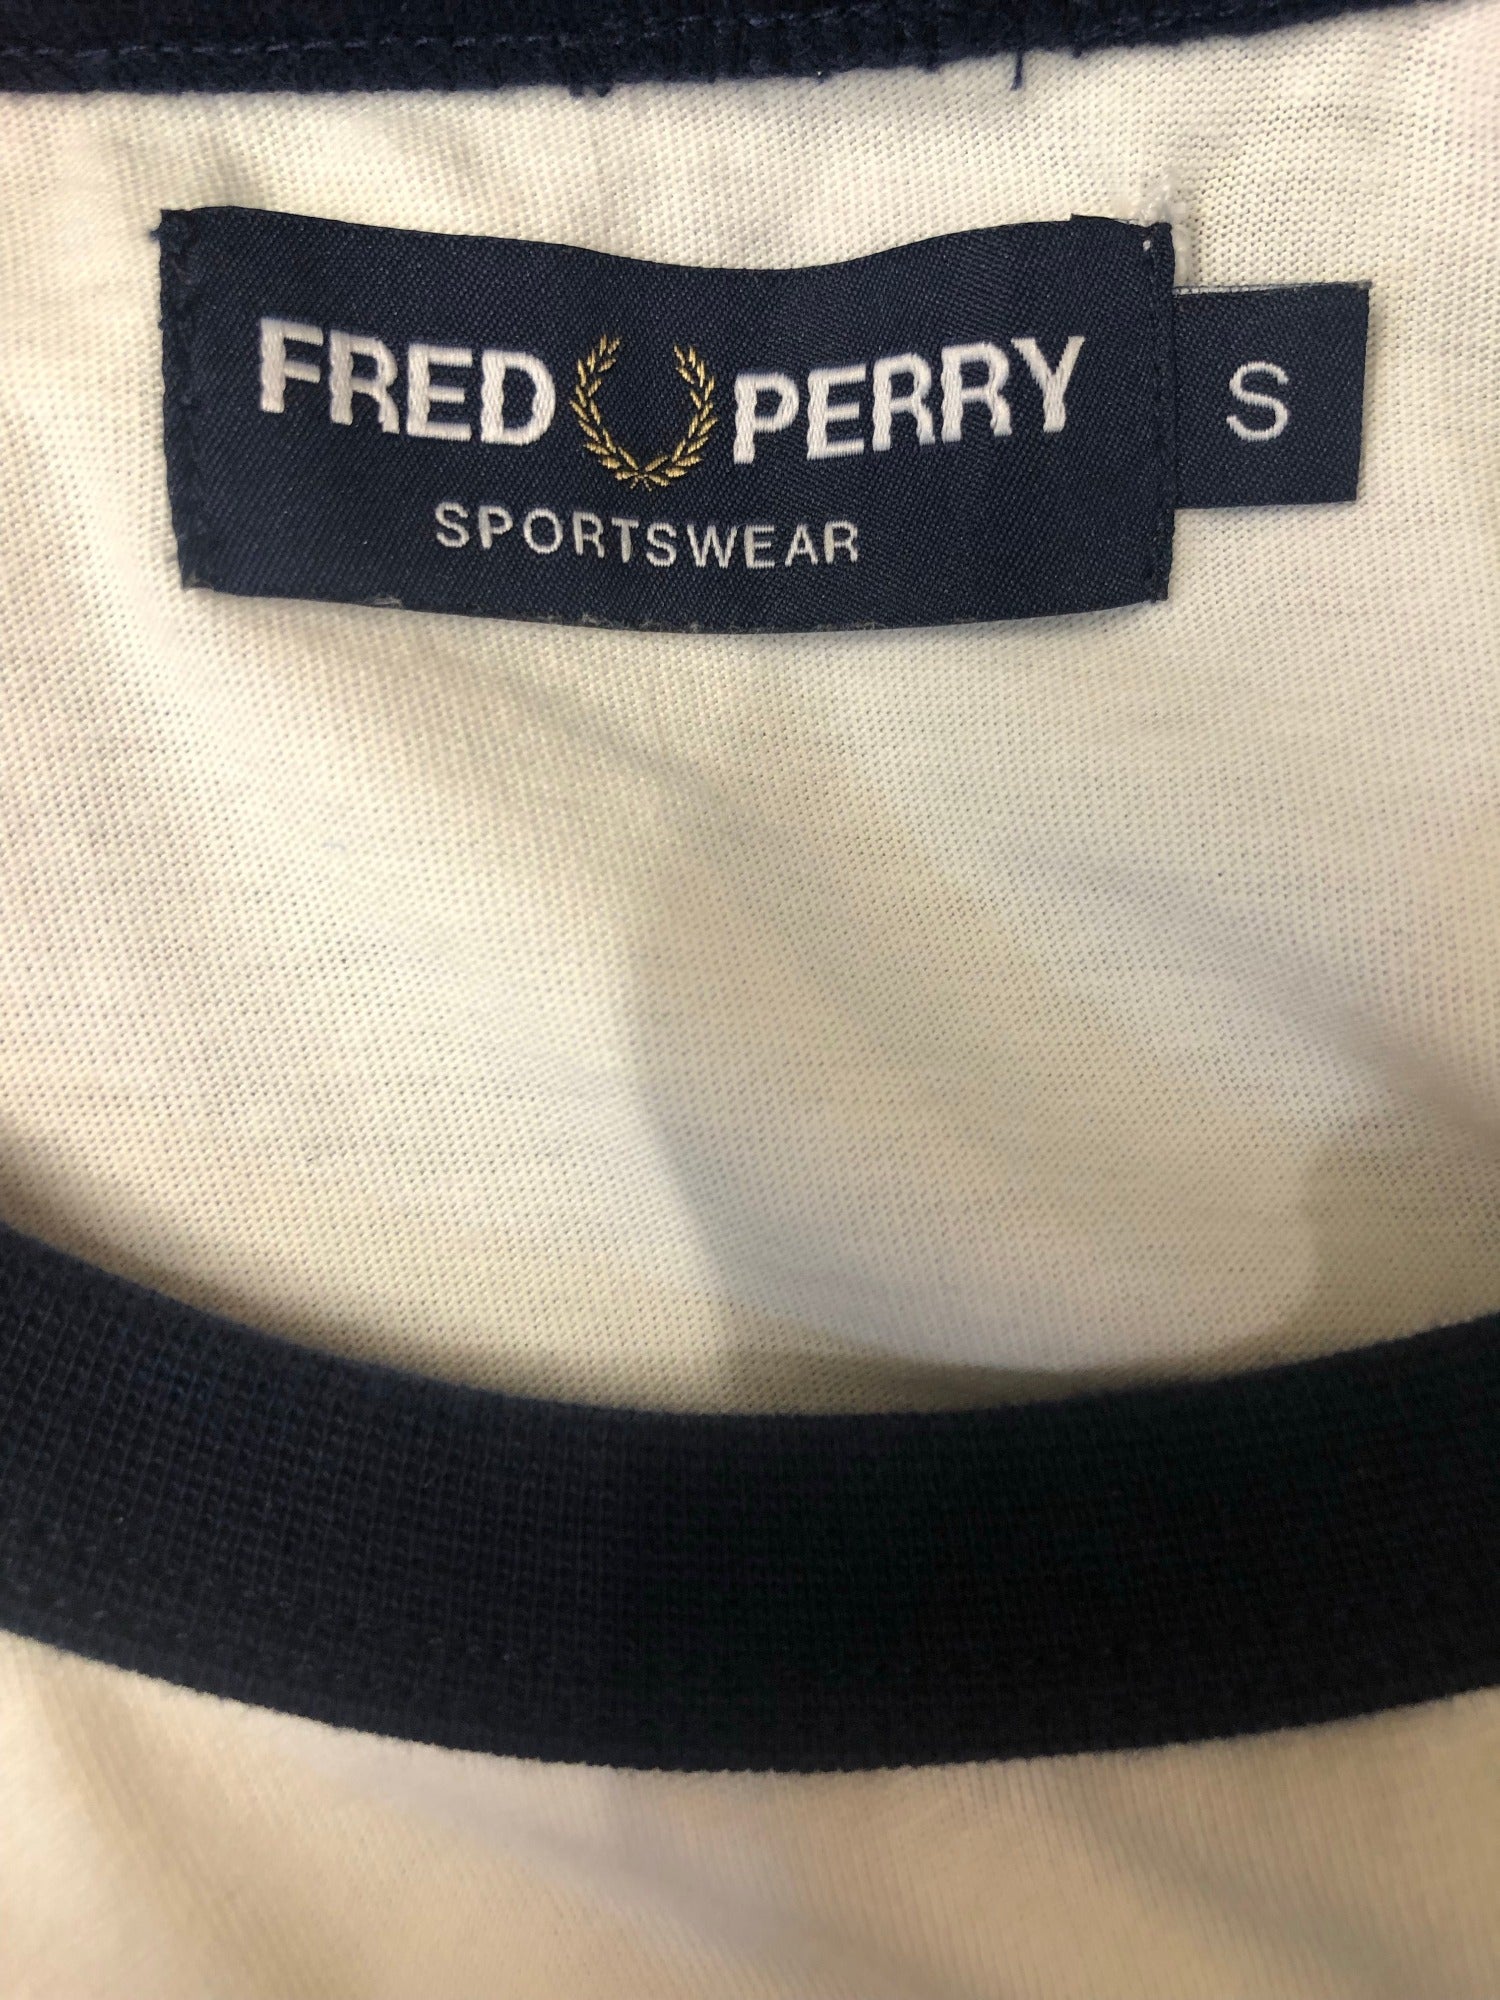 white  Top  T-Shirt  Stripes  sportswear  S  MOD  mens  Logo design  Fred Perry